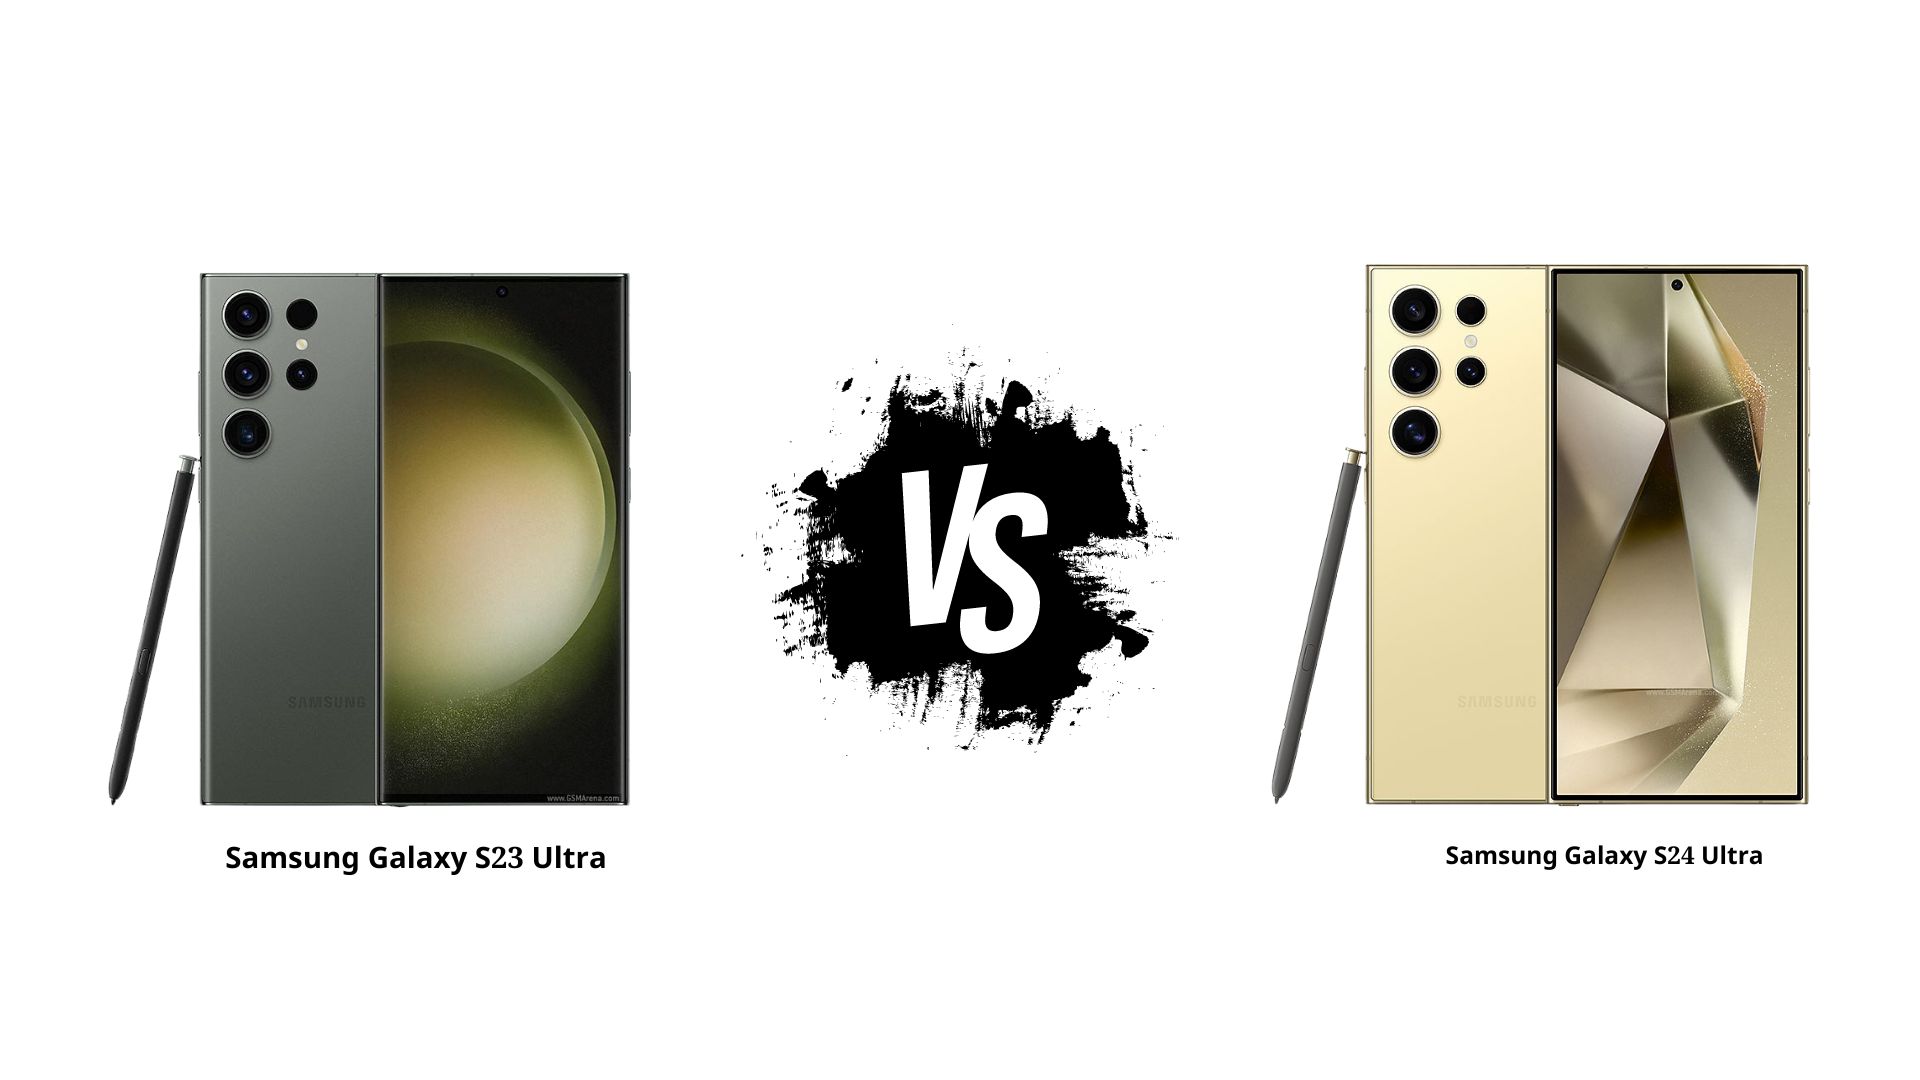 Samsung Galaxy S24 Ultra versus Galaxy S23 Ultra — what's